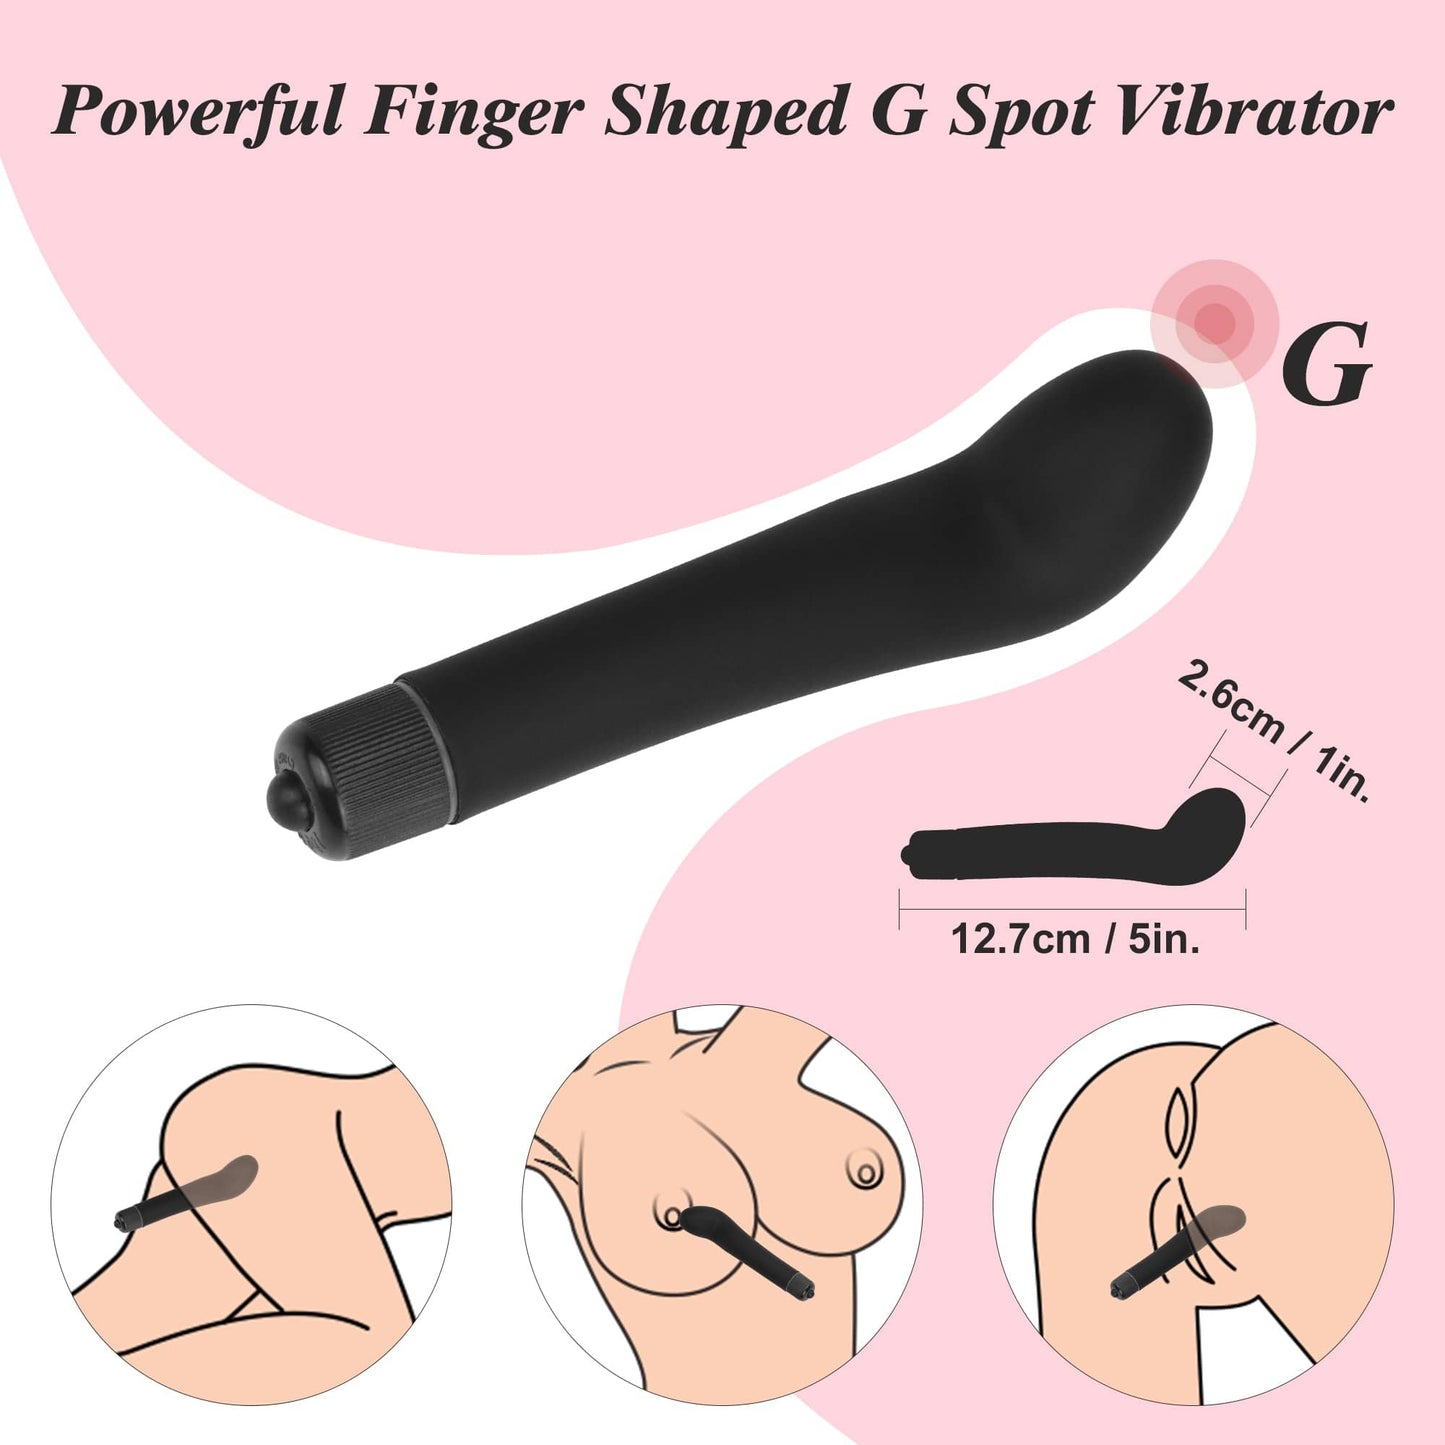 The size of the g spot vibrator of the bdsm bondage sets